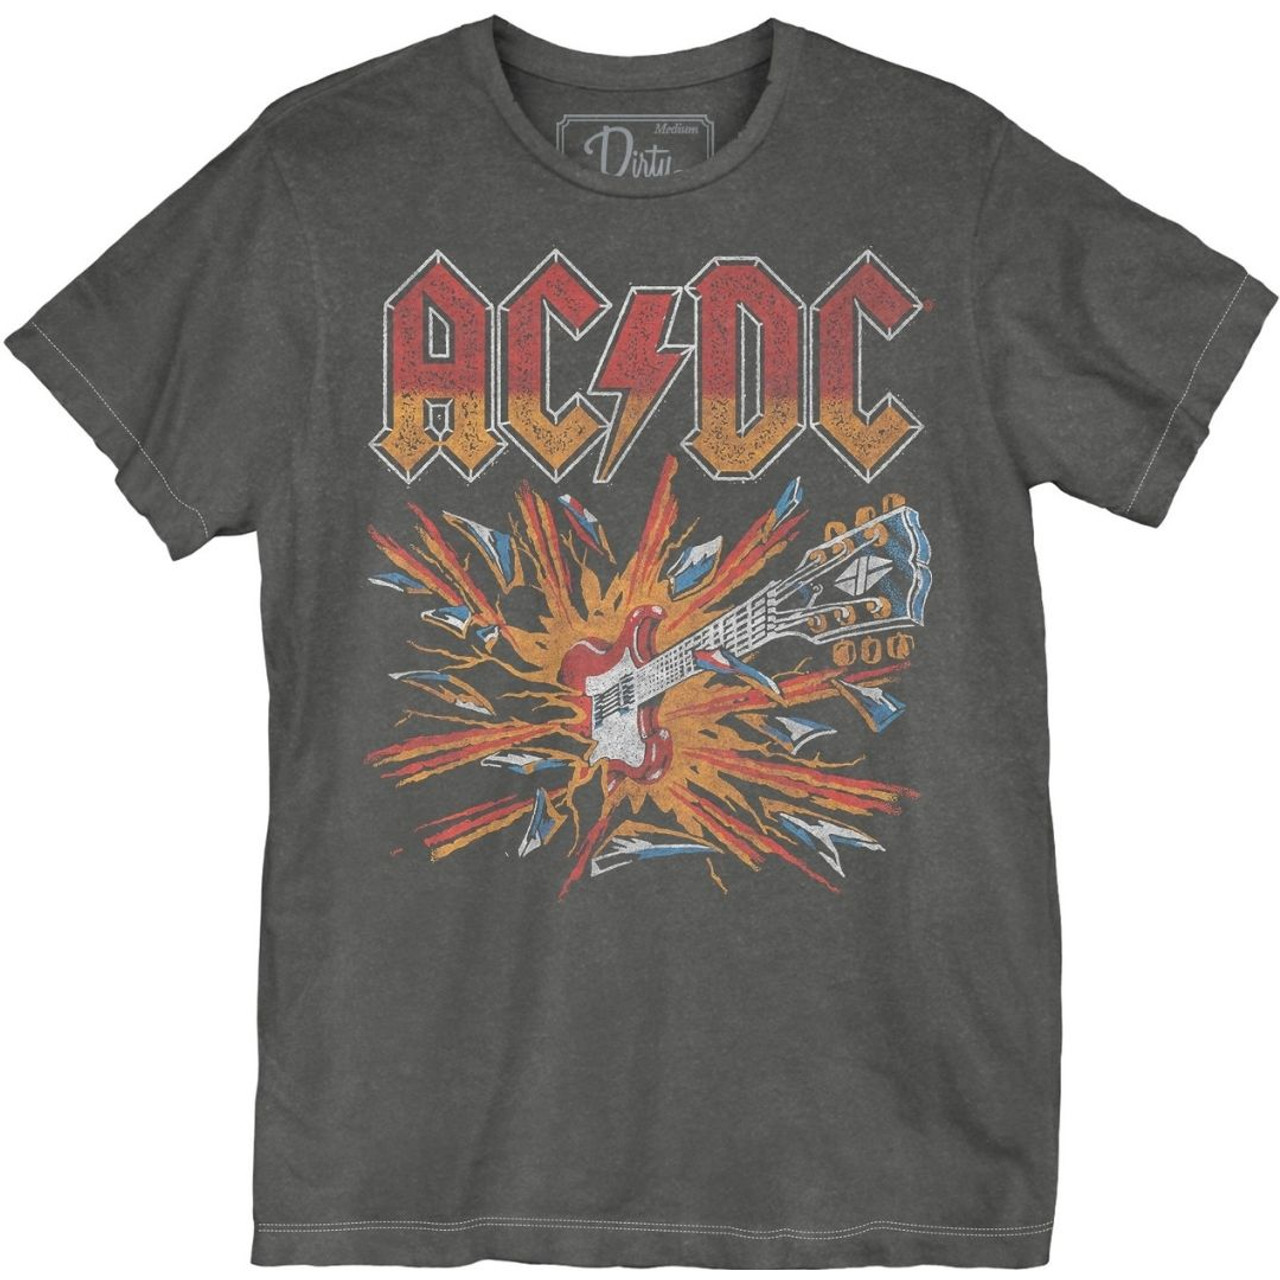 AC/DC Vintage Fashion T-shirt by Dirty Cotton Scoundrels - Explosion Logo. Men's Unisex Black Shirt Rocker Rags